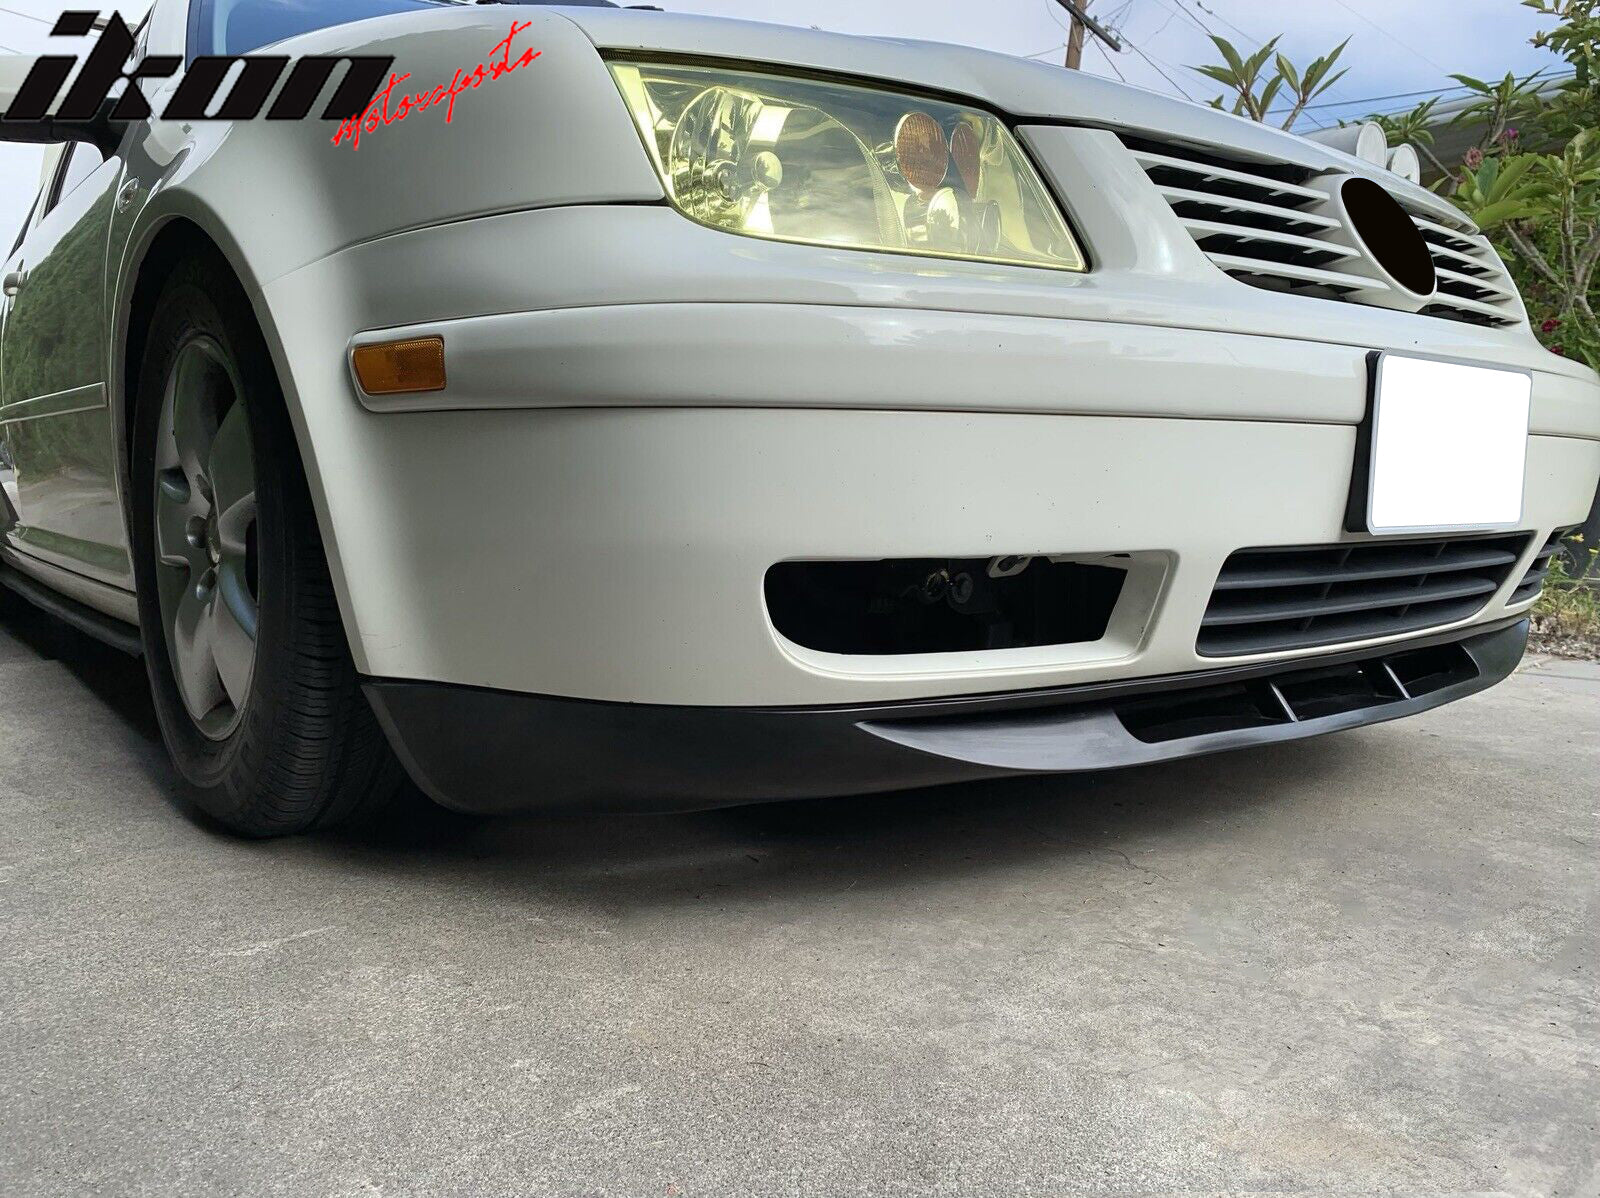 Rear Bumper Lip Compatible With 99-05 VW Volkswagen Golf MK4, 25AE Style  Unpainted Black PU by IKON MOTORSPORTS – Ikon Motorsports